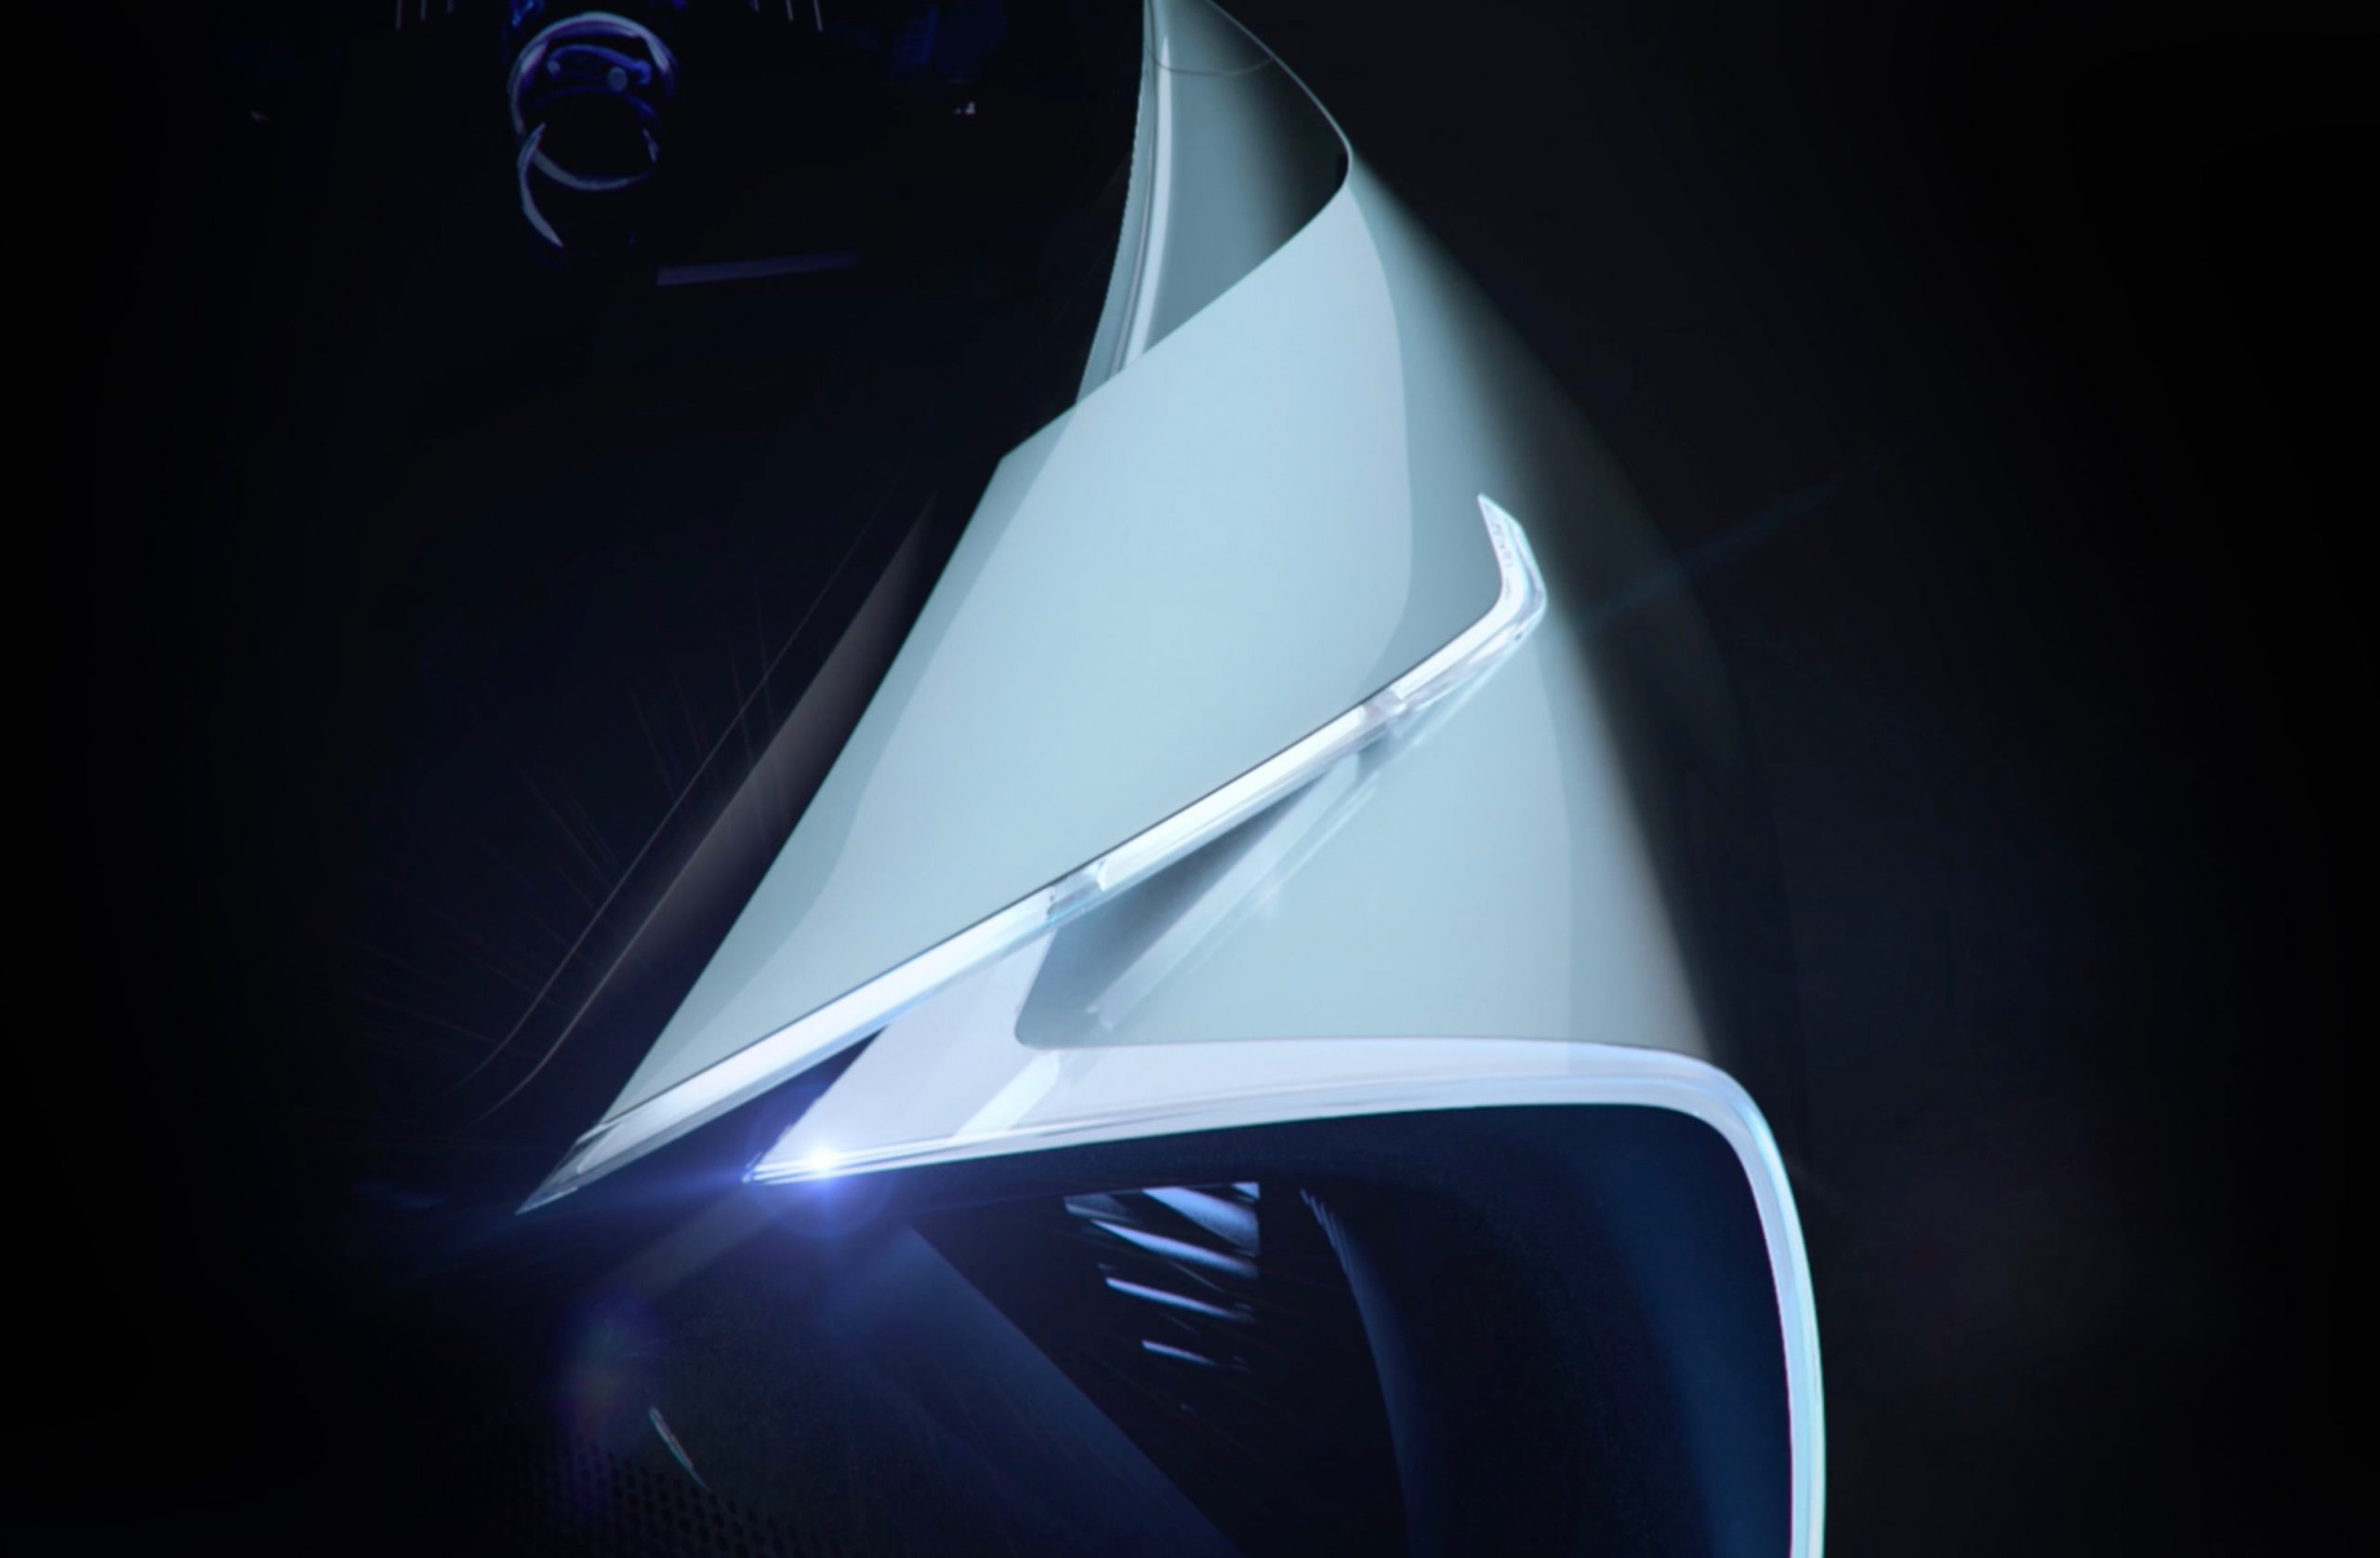 Lexus previews electric concept bound for Tokyo show